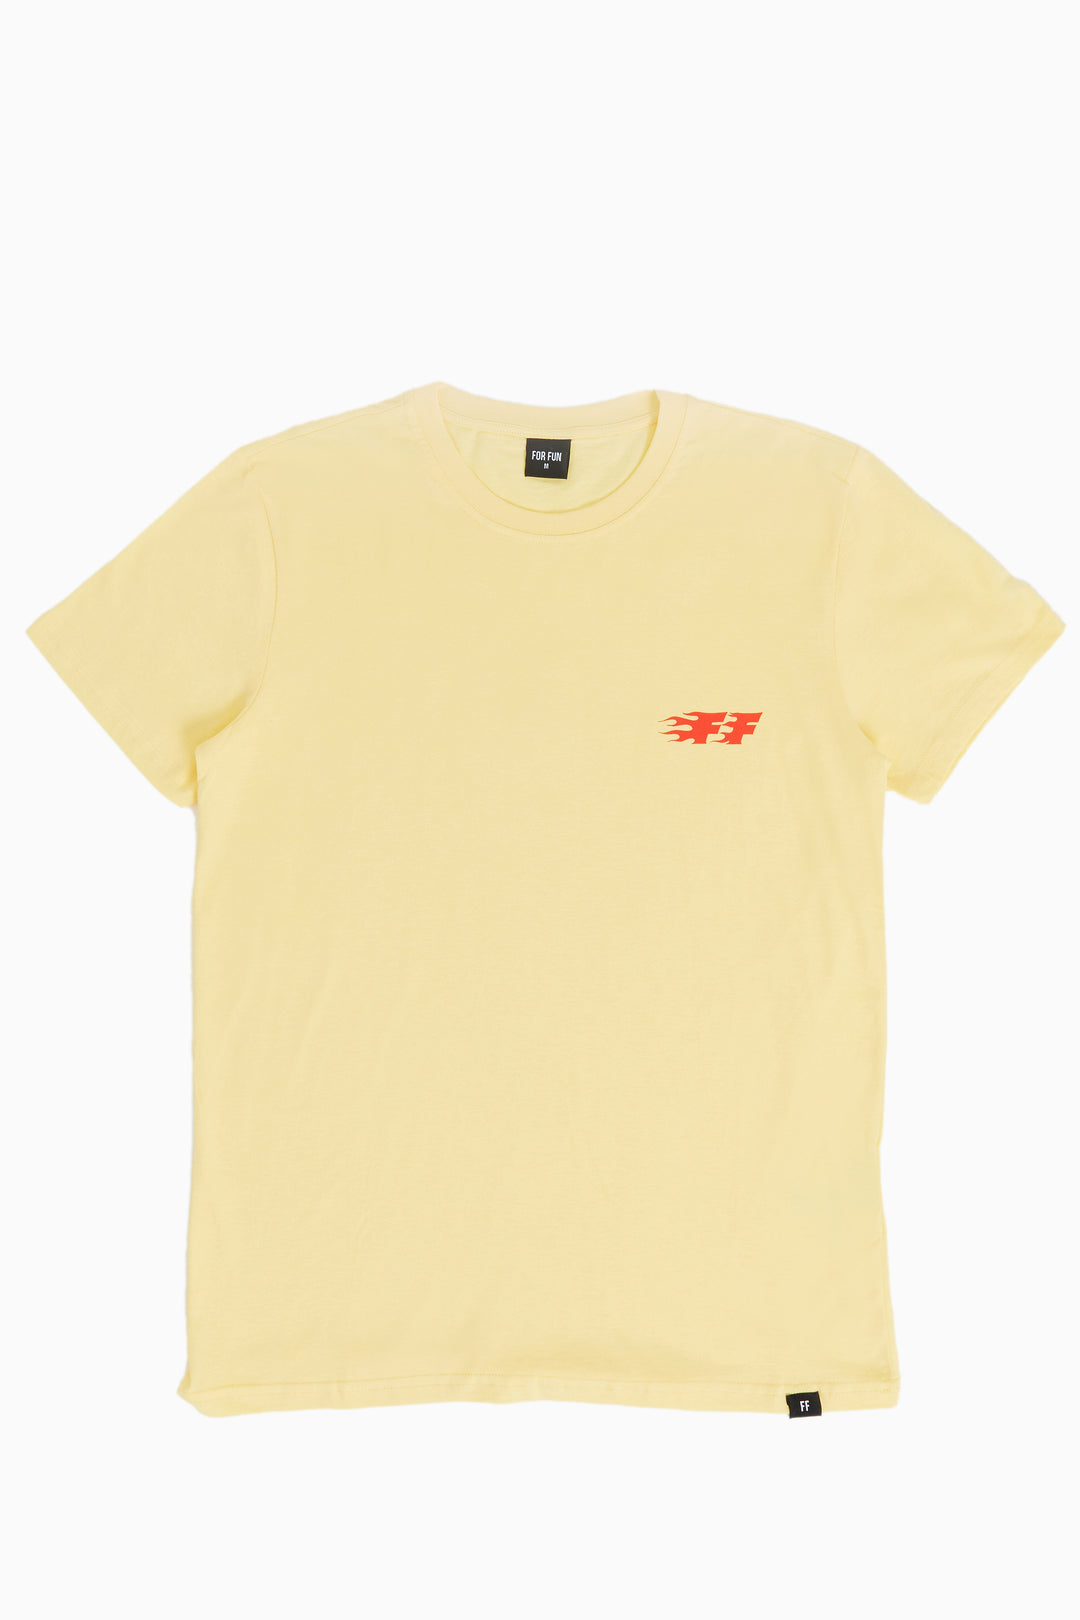 FF Feuerball / T-shirt